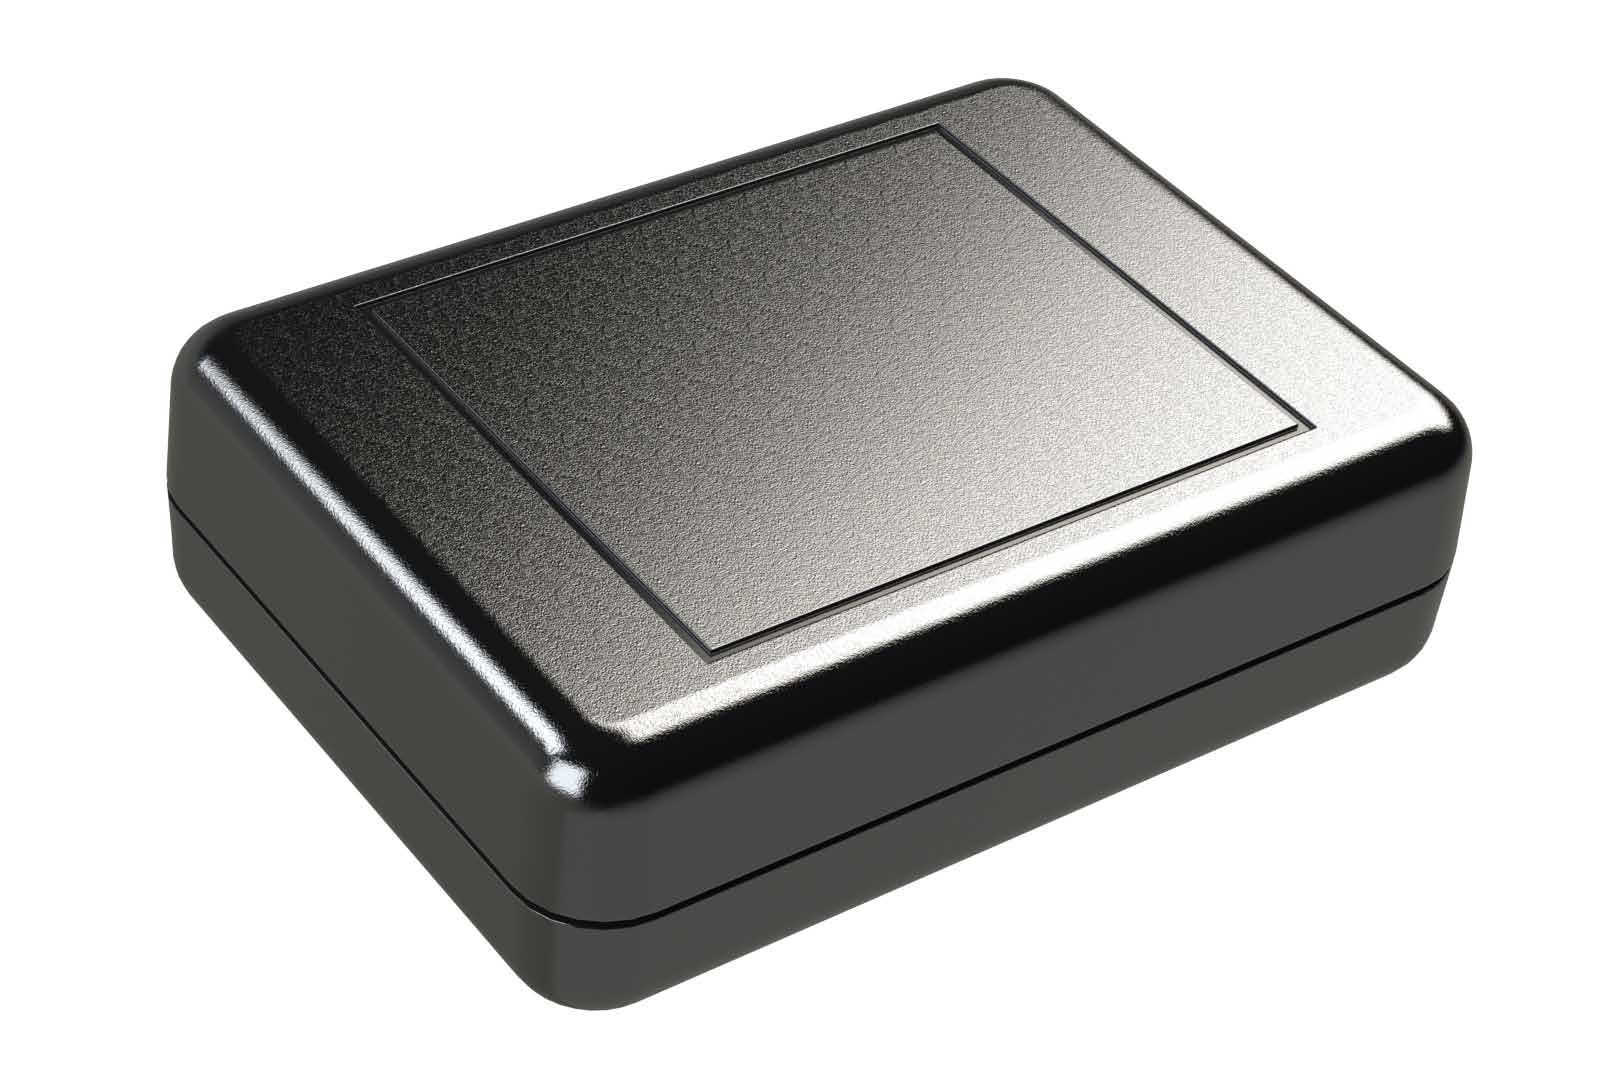 PCB Aluminum Box Black Enclosure Electronic Project Case DIY 50x25mm 